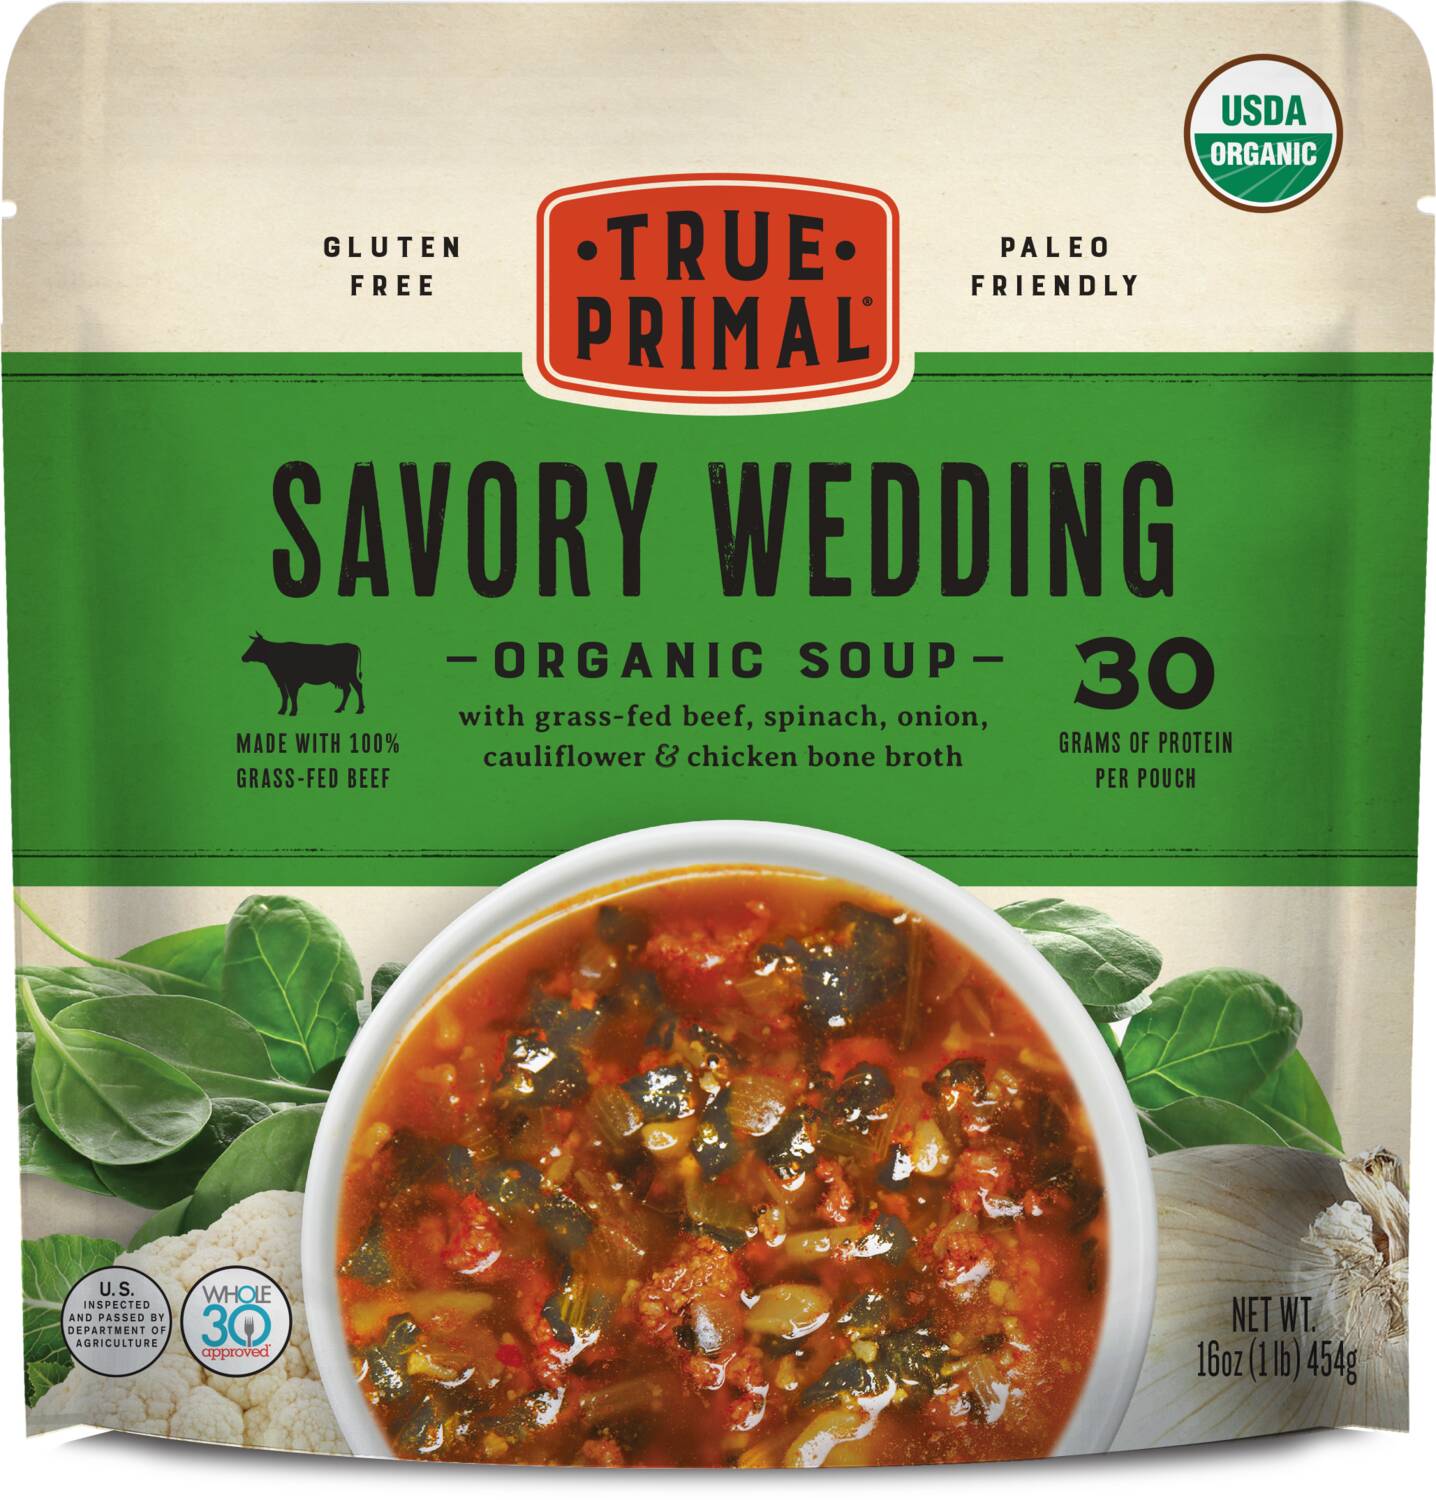 True Primal Savory Wedding Organic Soup